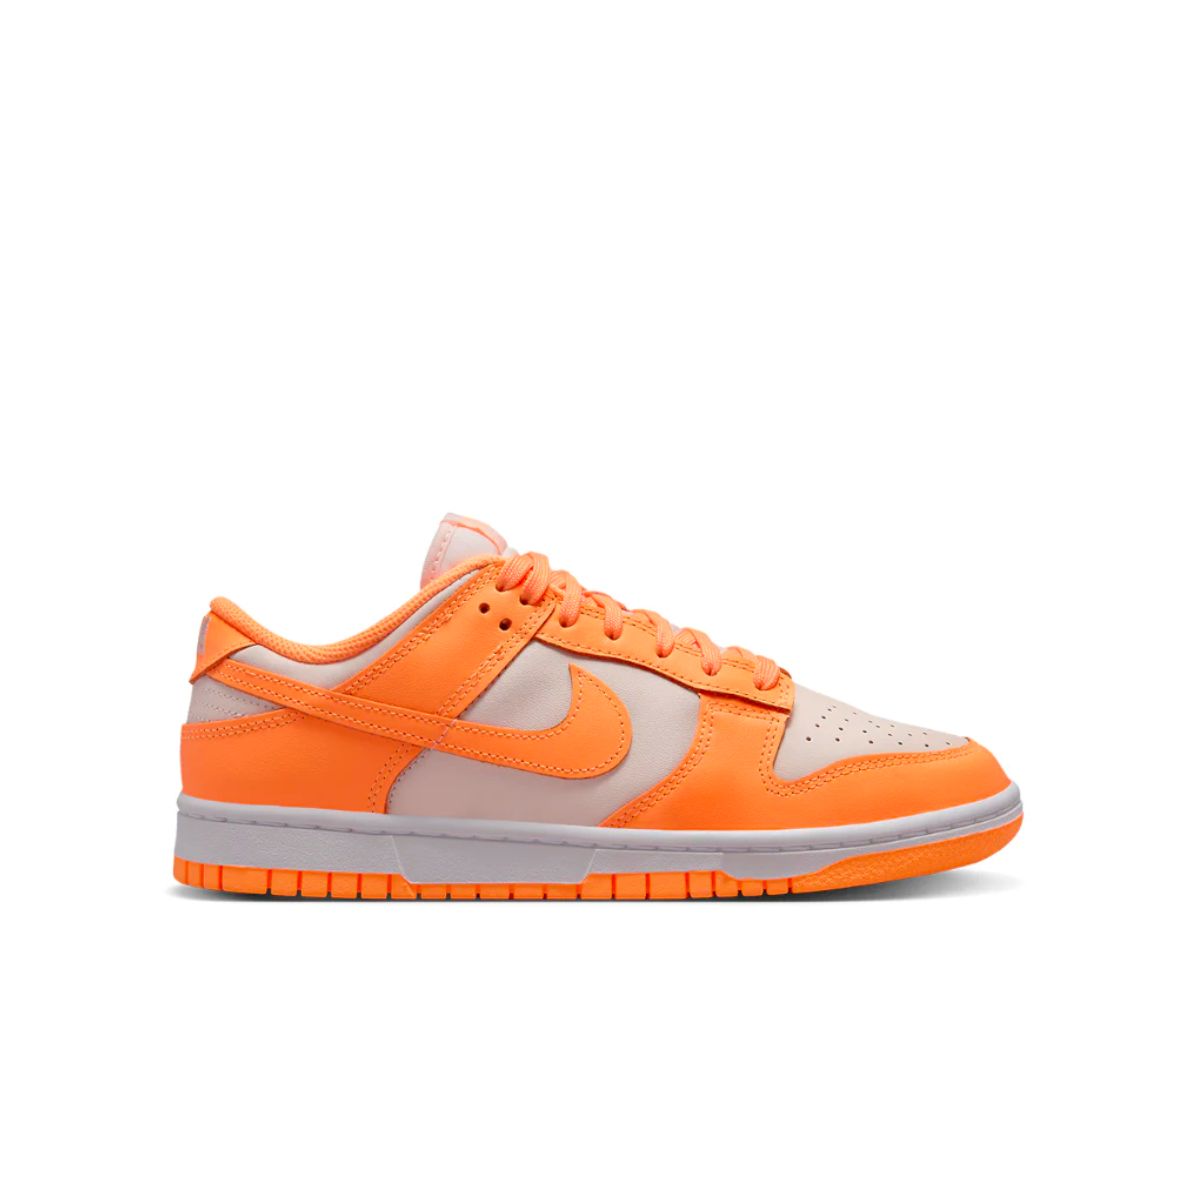 Orange Nike Dunks Shoelace Replacements - Kicks Shoelaces